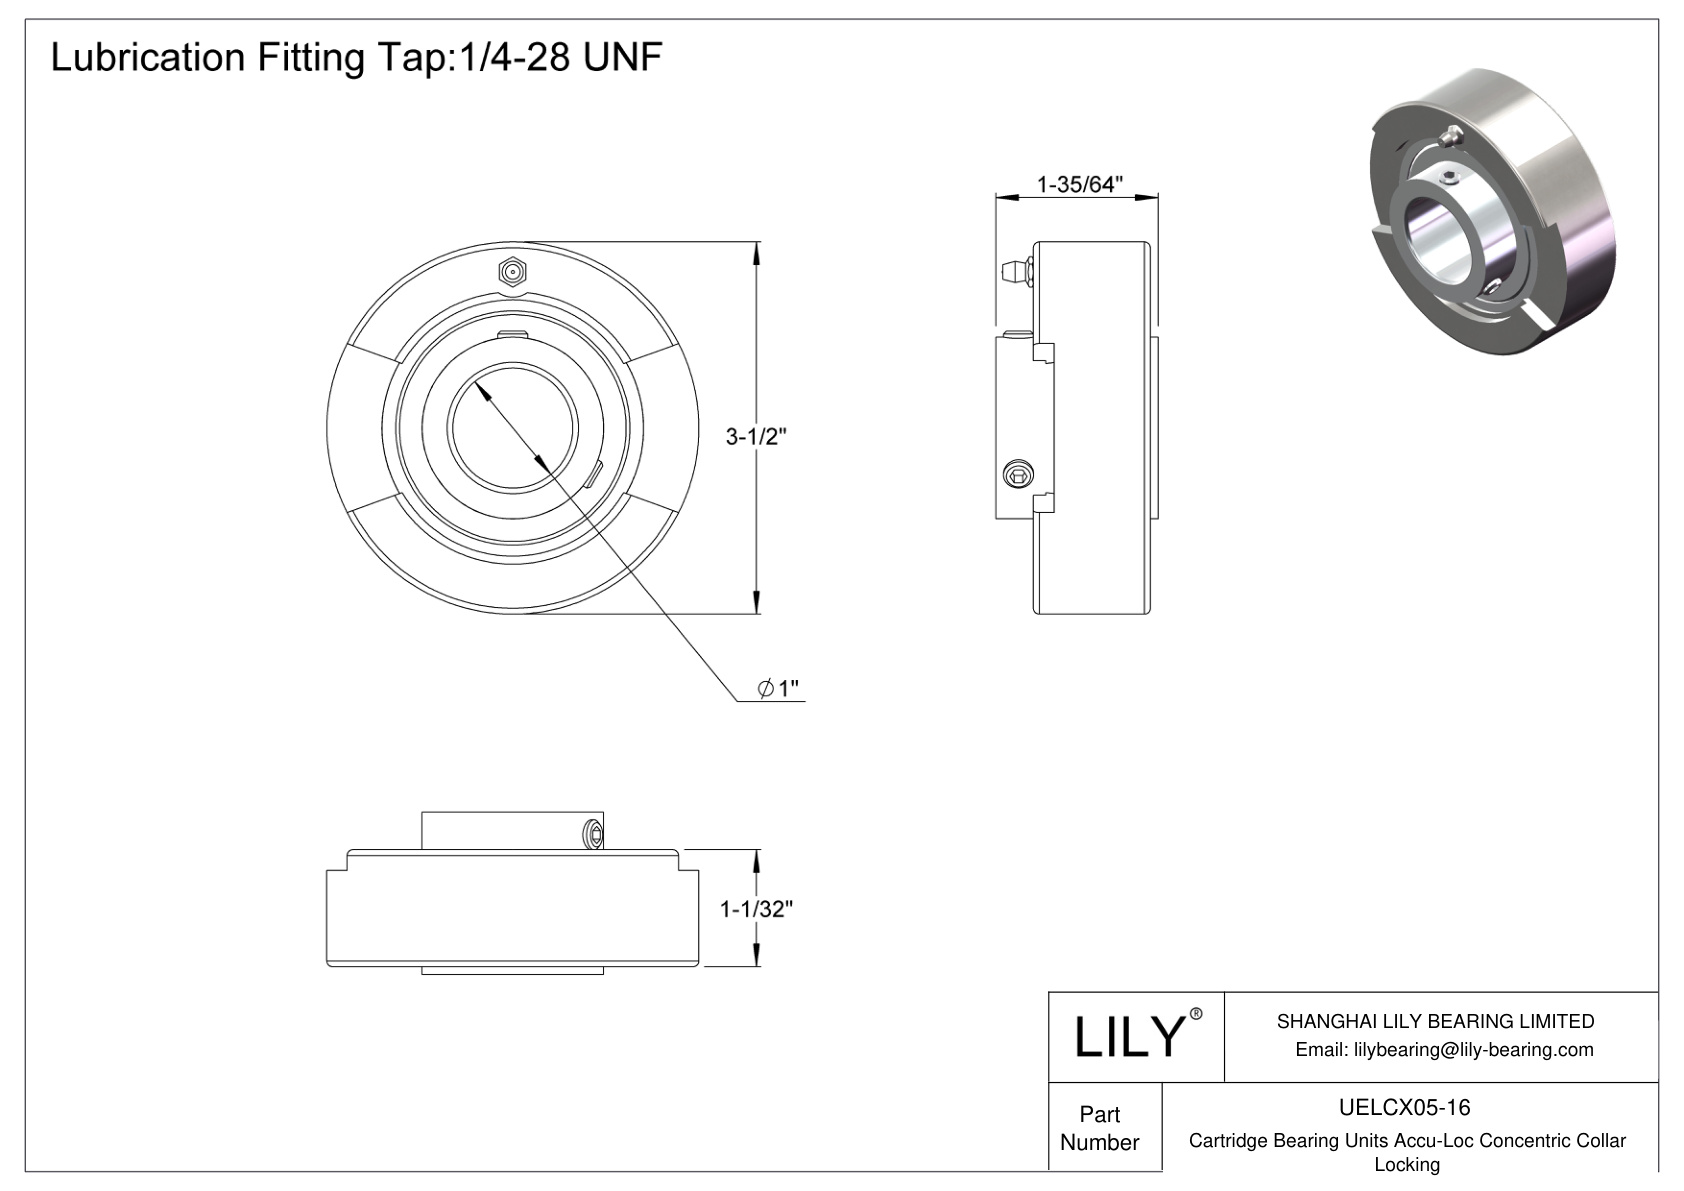 UELCX05-16 Cartridge Bearing Units Accu-Loc Concentric Collar Locking cad drawing